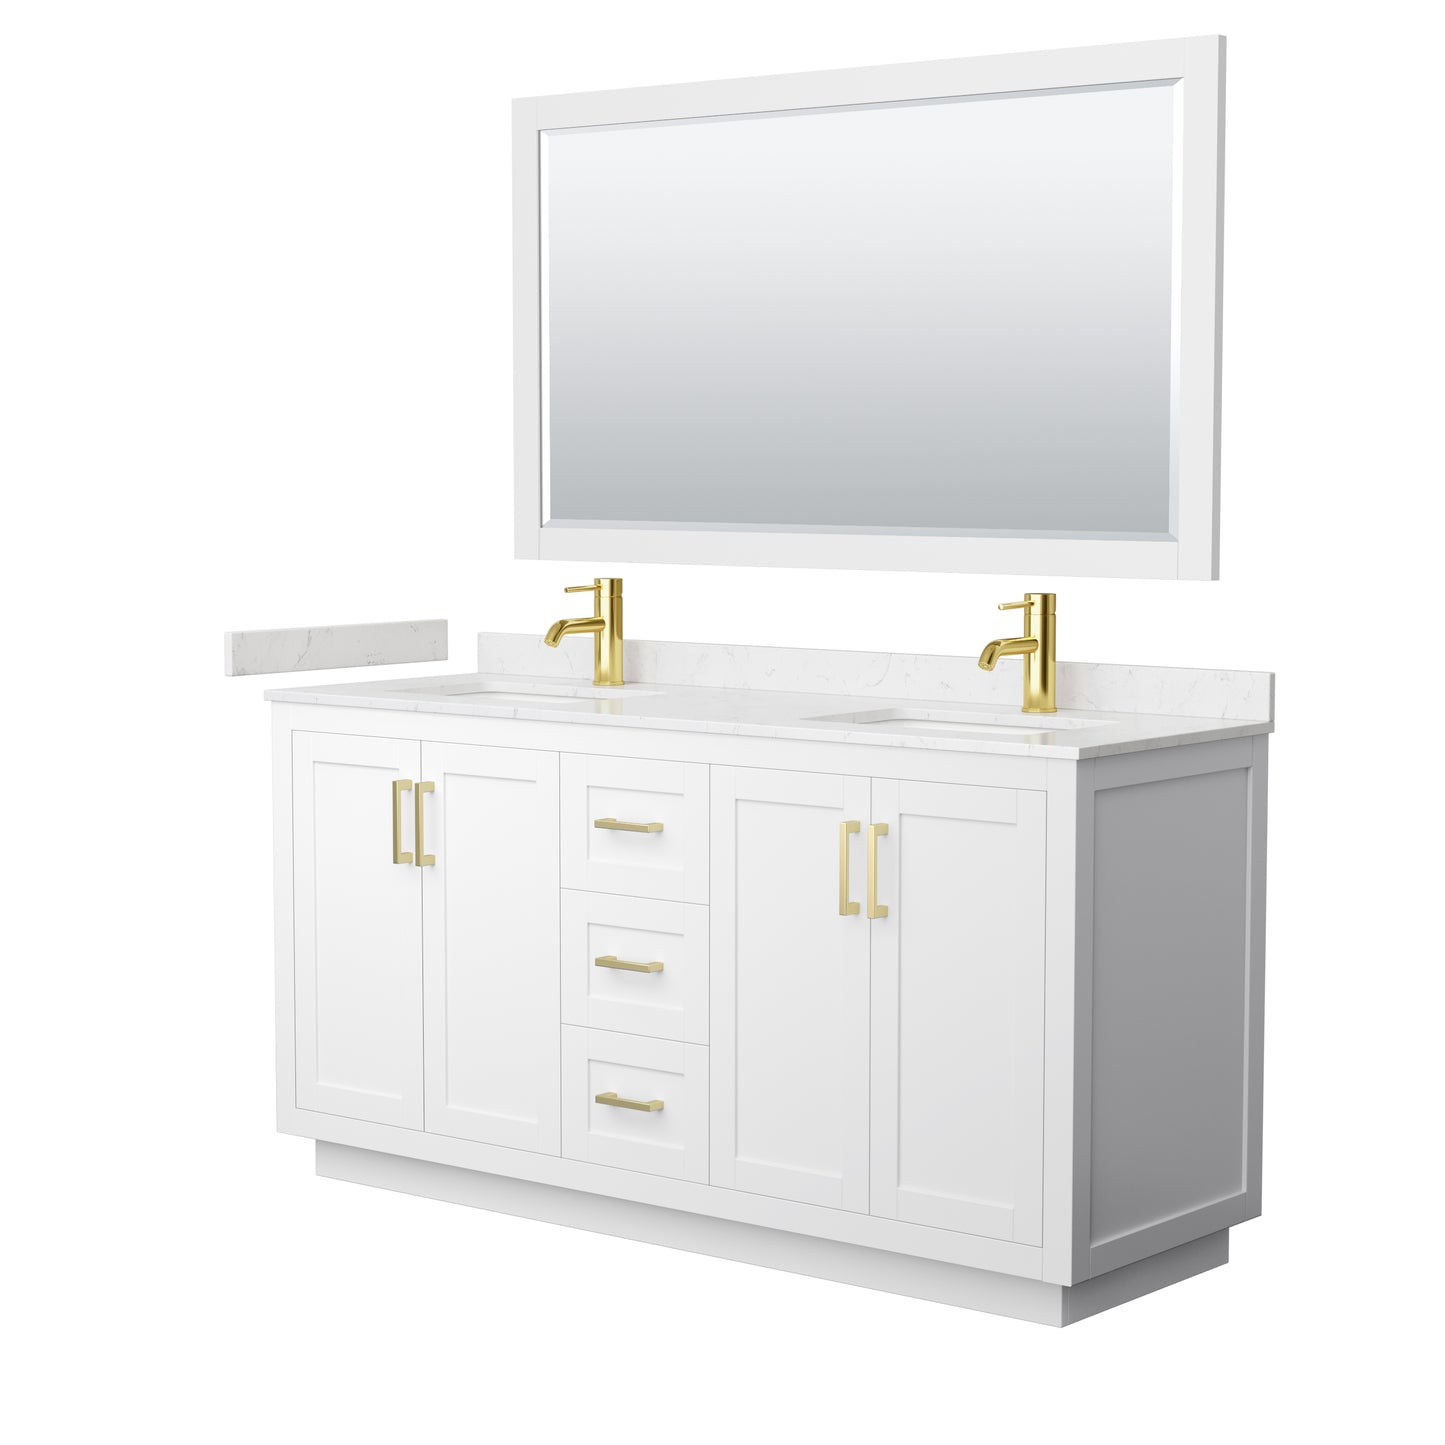 Wyndham Miranda 66 Inch Double Bathroom Vanity in Light-Vein Carrara Cultured Marble Countertop with Undermount Square Sinks and Trim - Luxe Bathroom Vanities